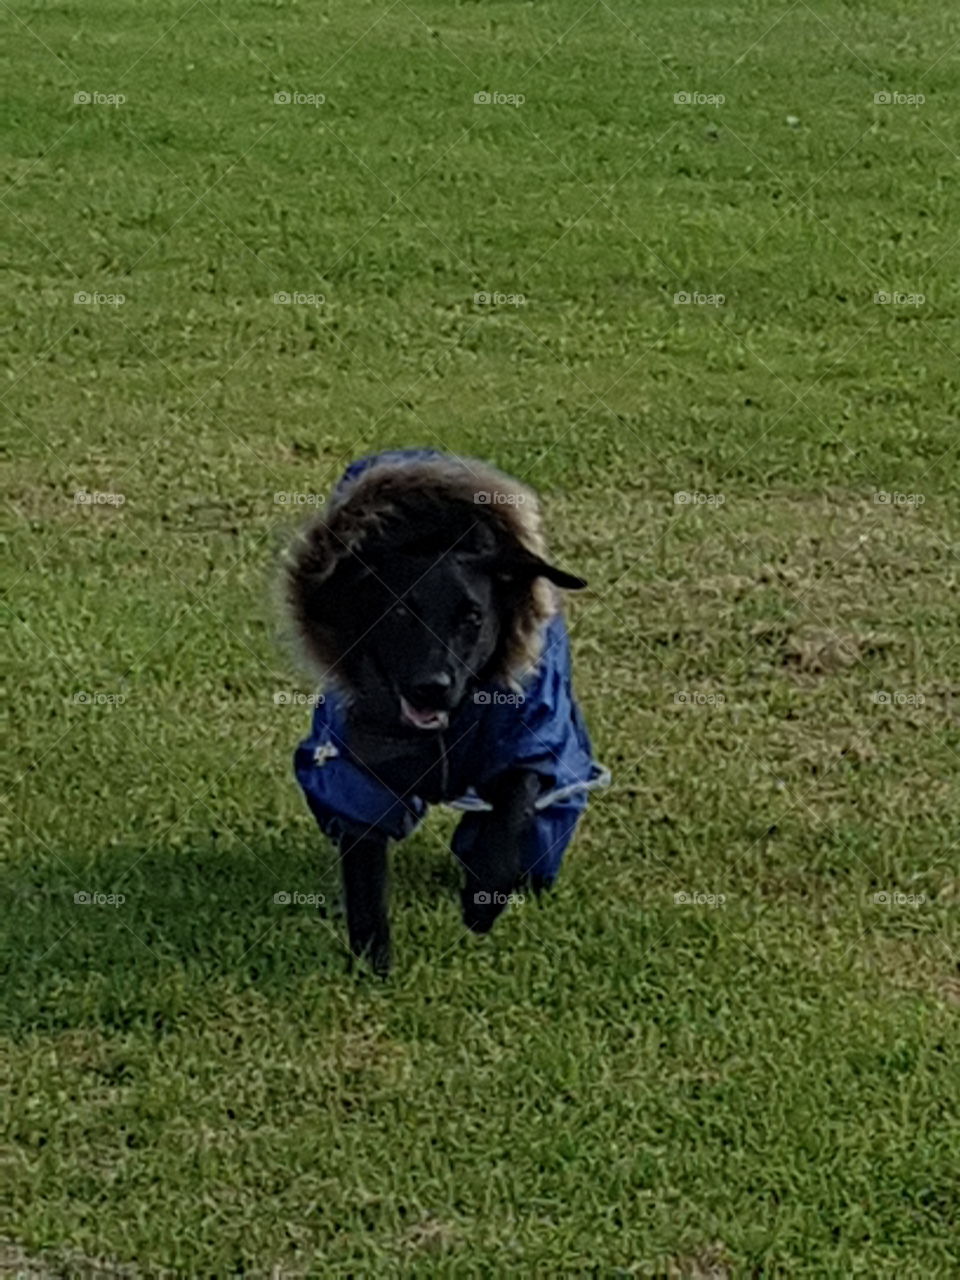 my dog in his new coat running